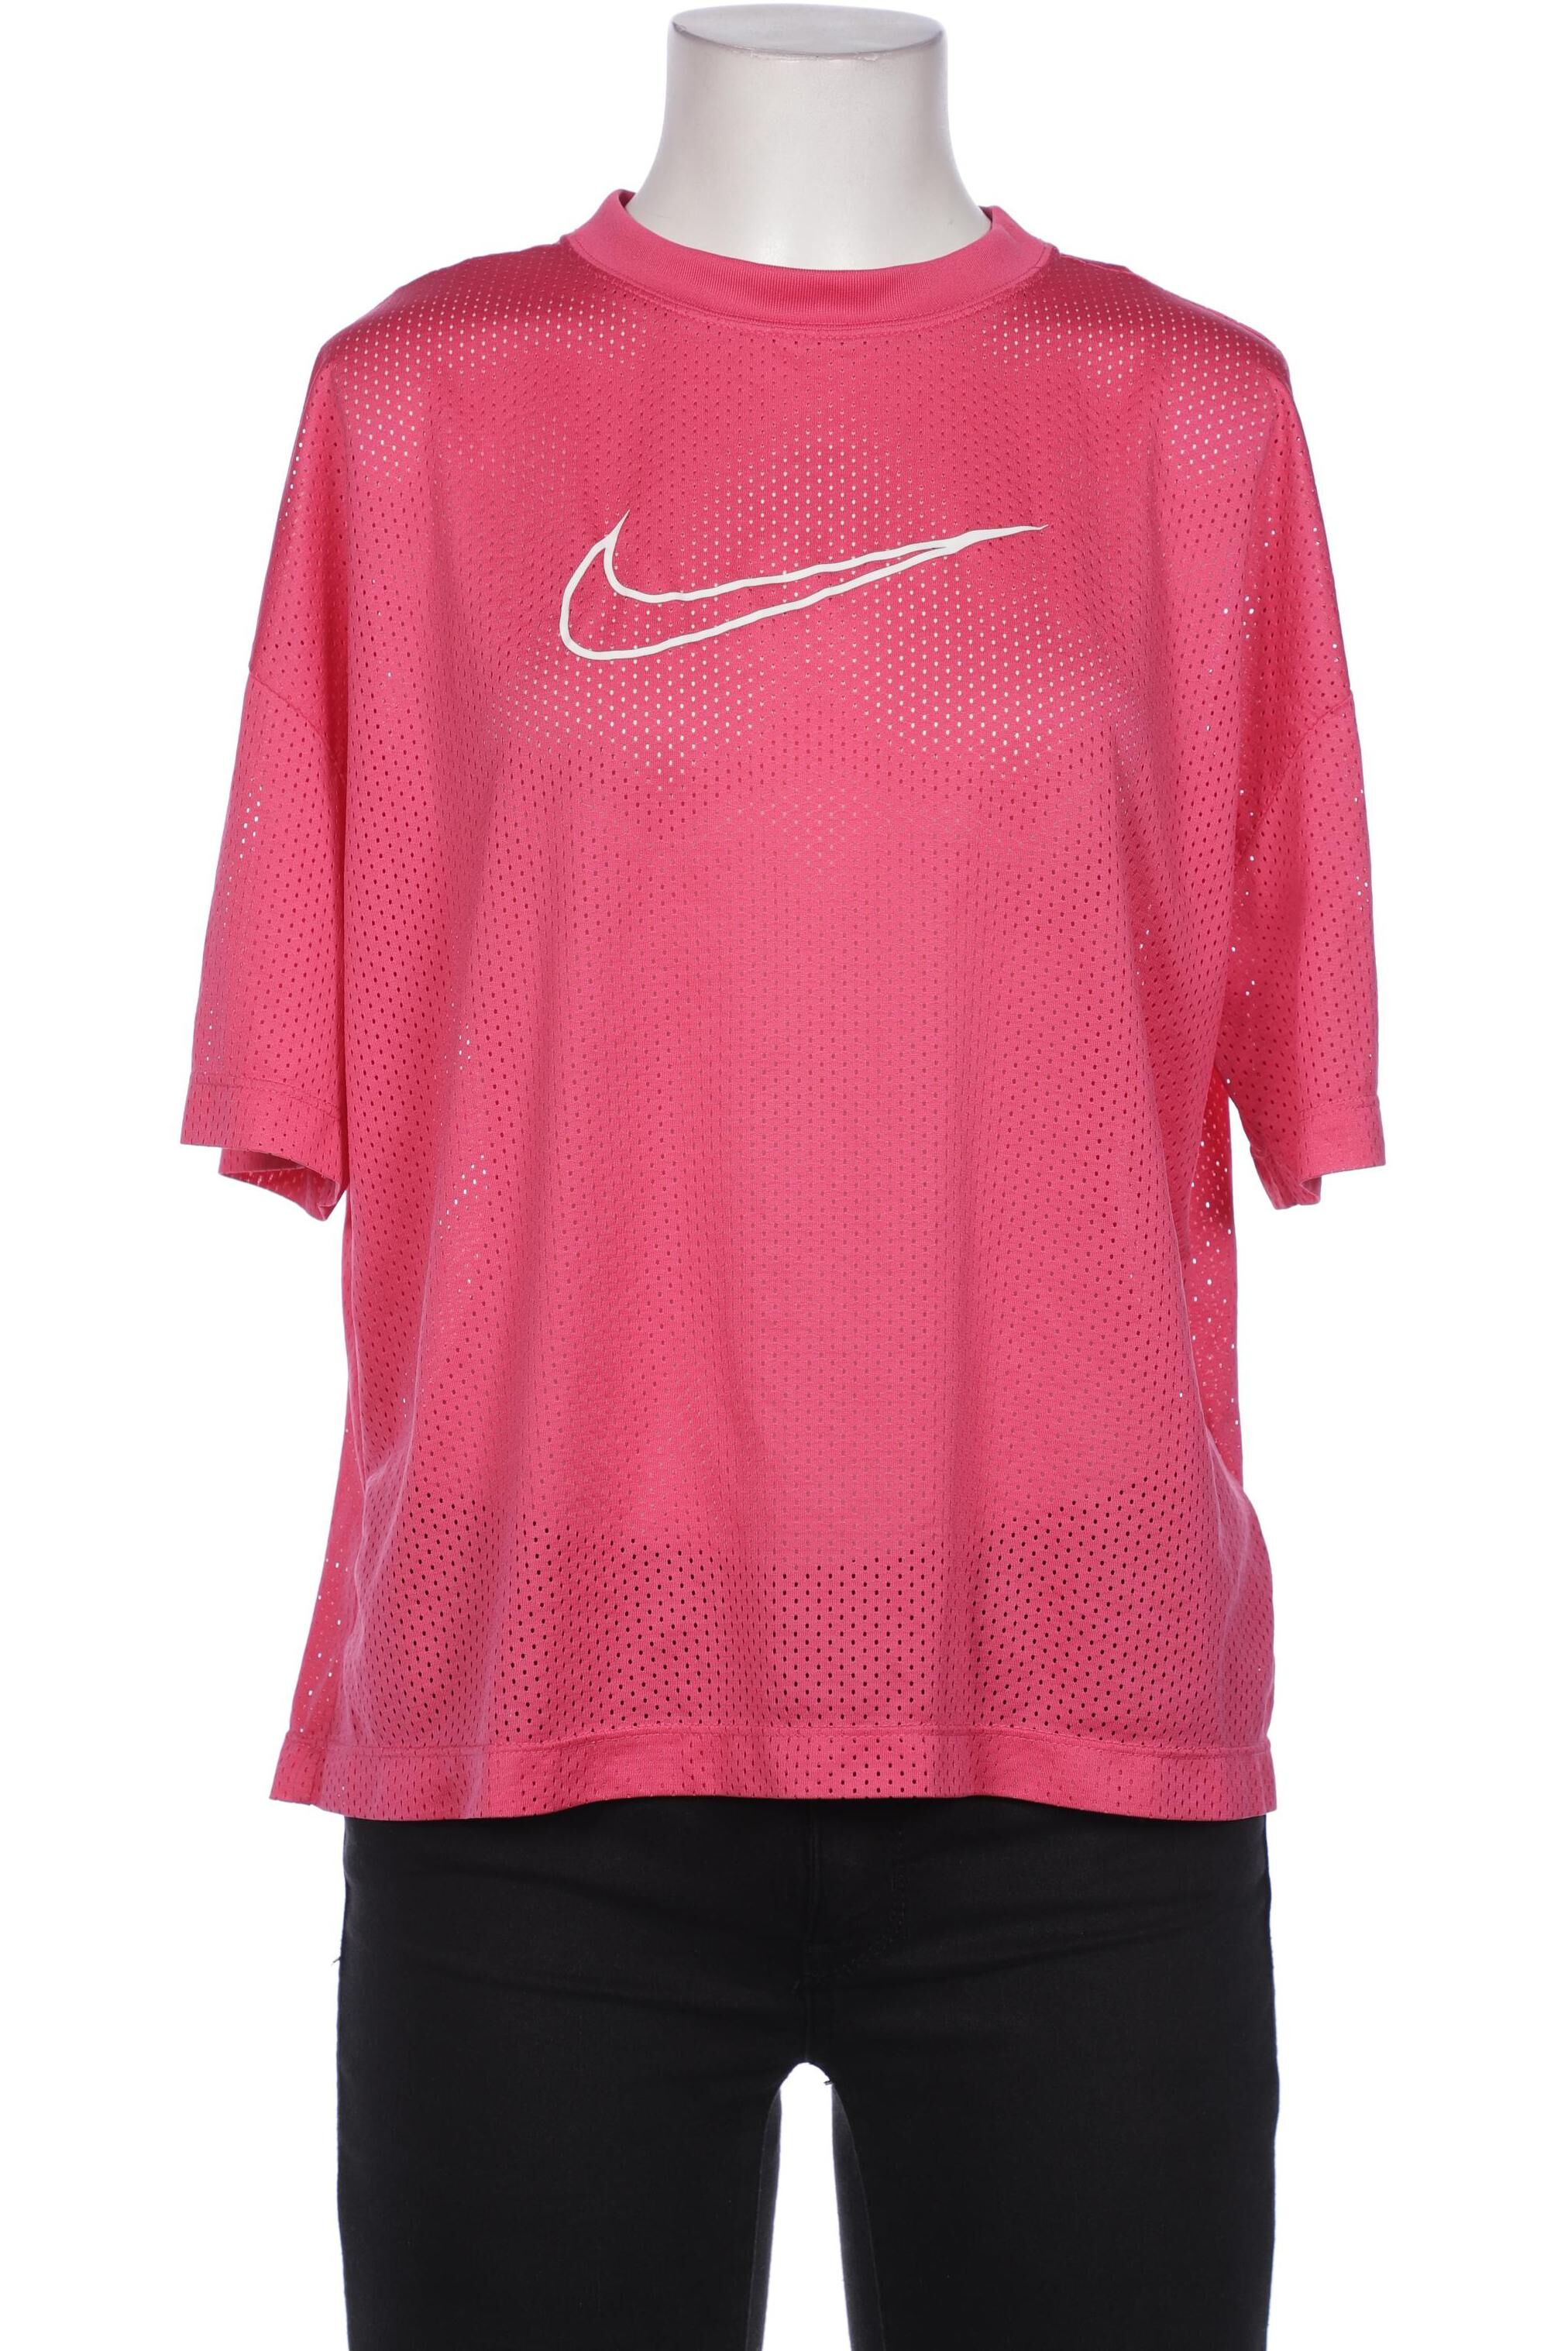 Nike T-shirt femme, rose 47